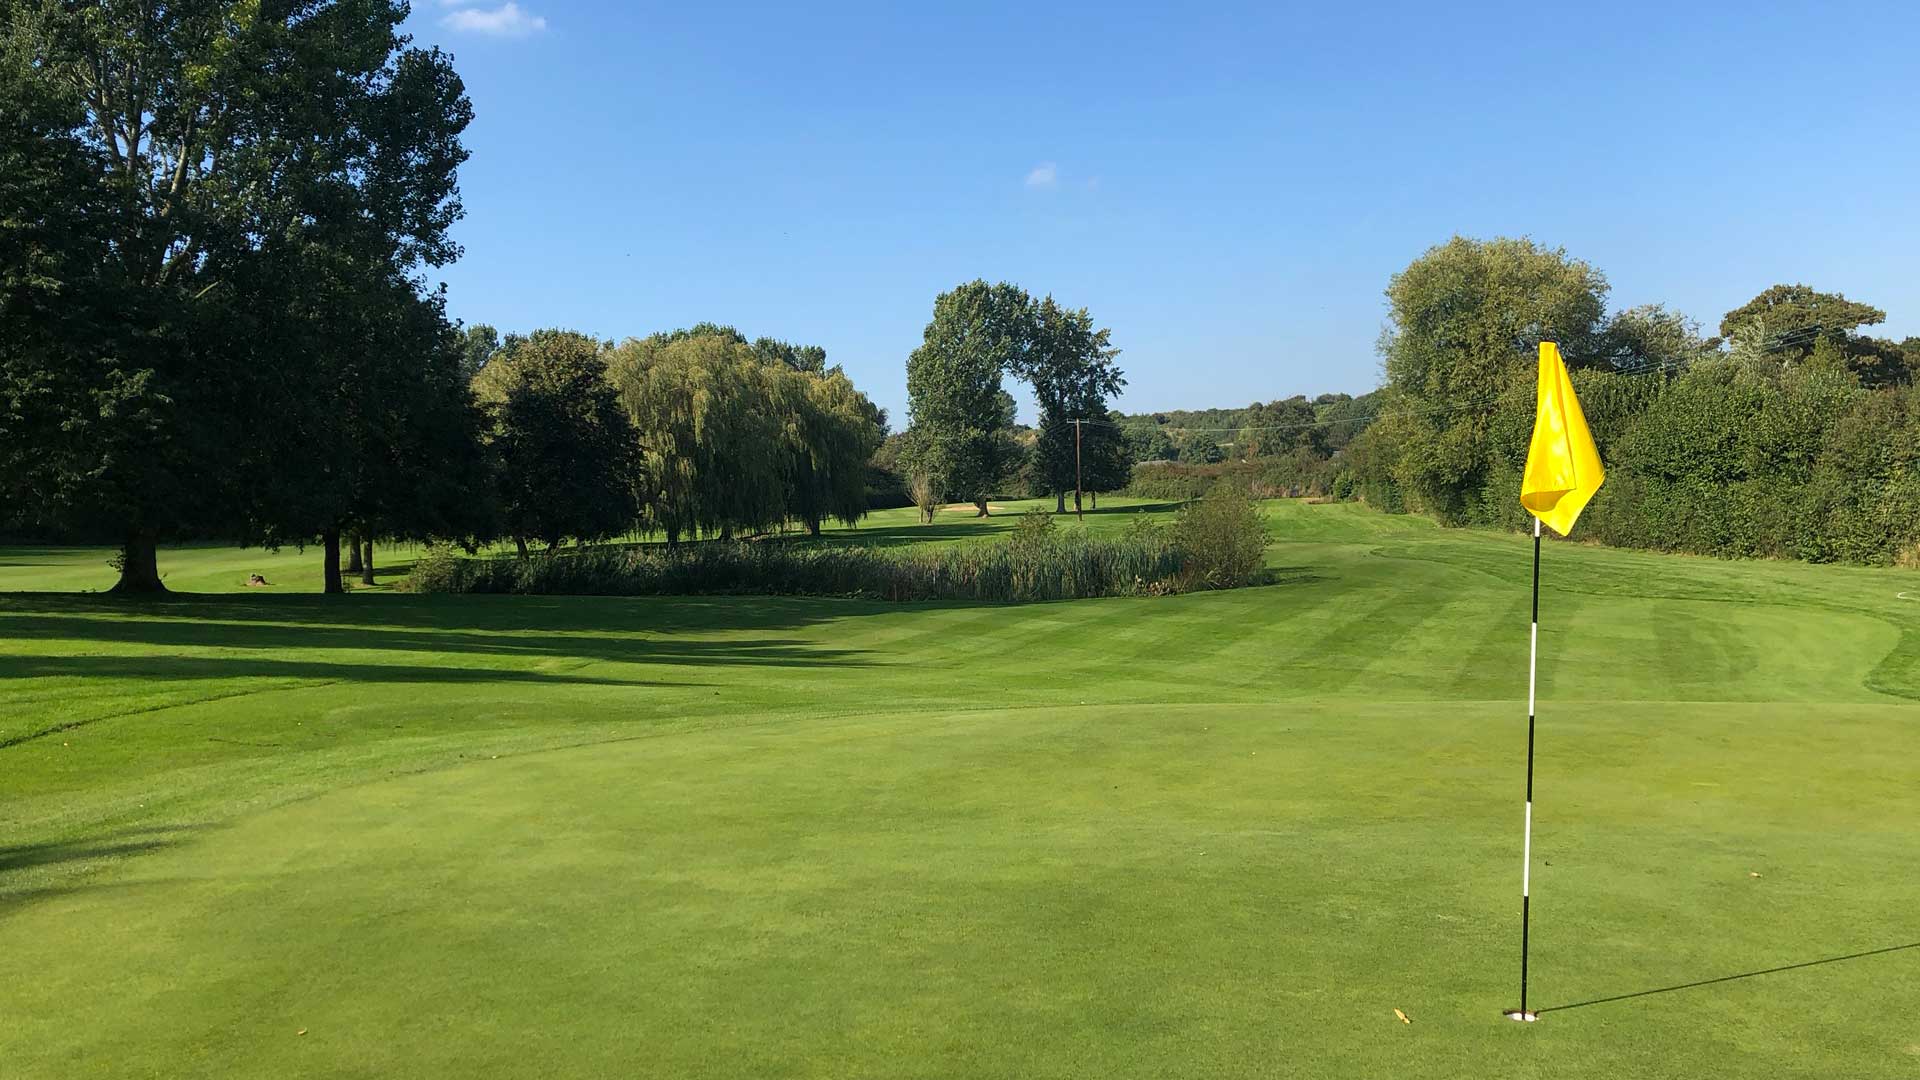 https://claysgolf.co.uk/wp-content/uploads/2020/09/Clays-Golf-Course-Hero-BG-15.jpg